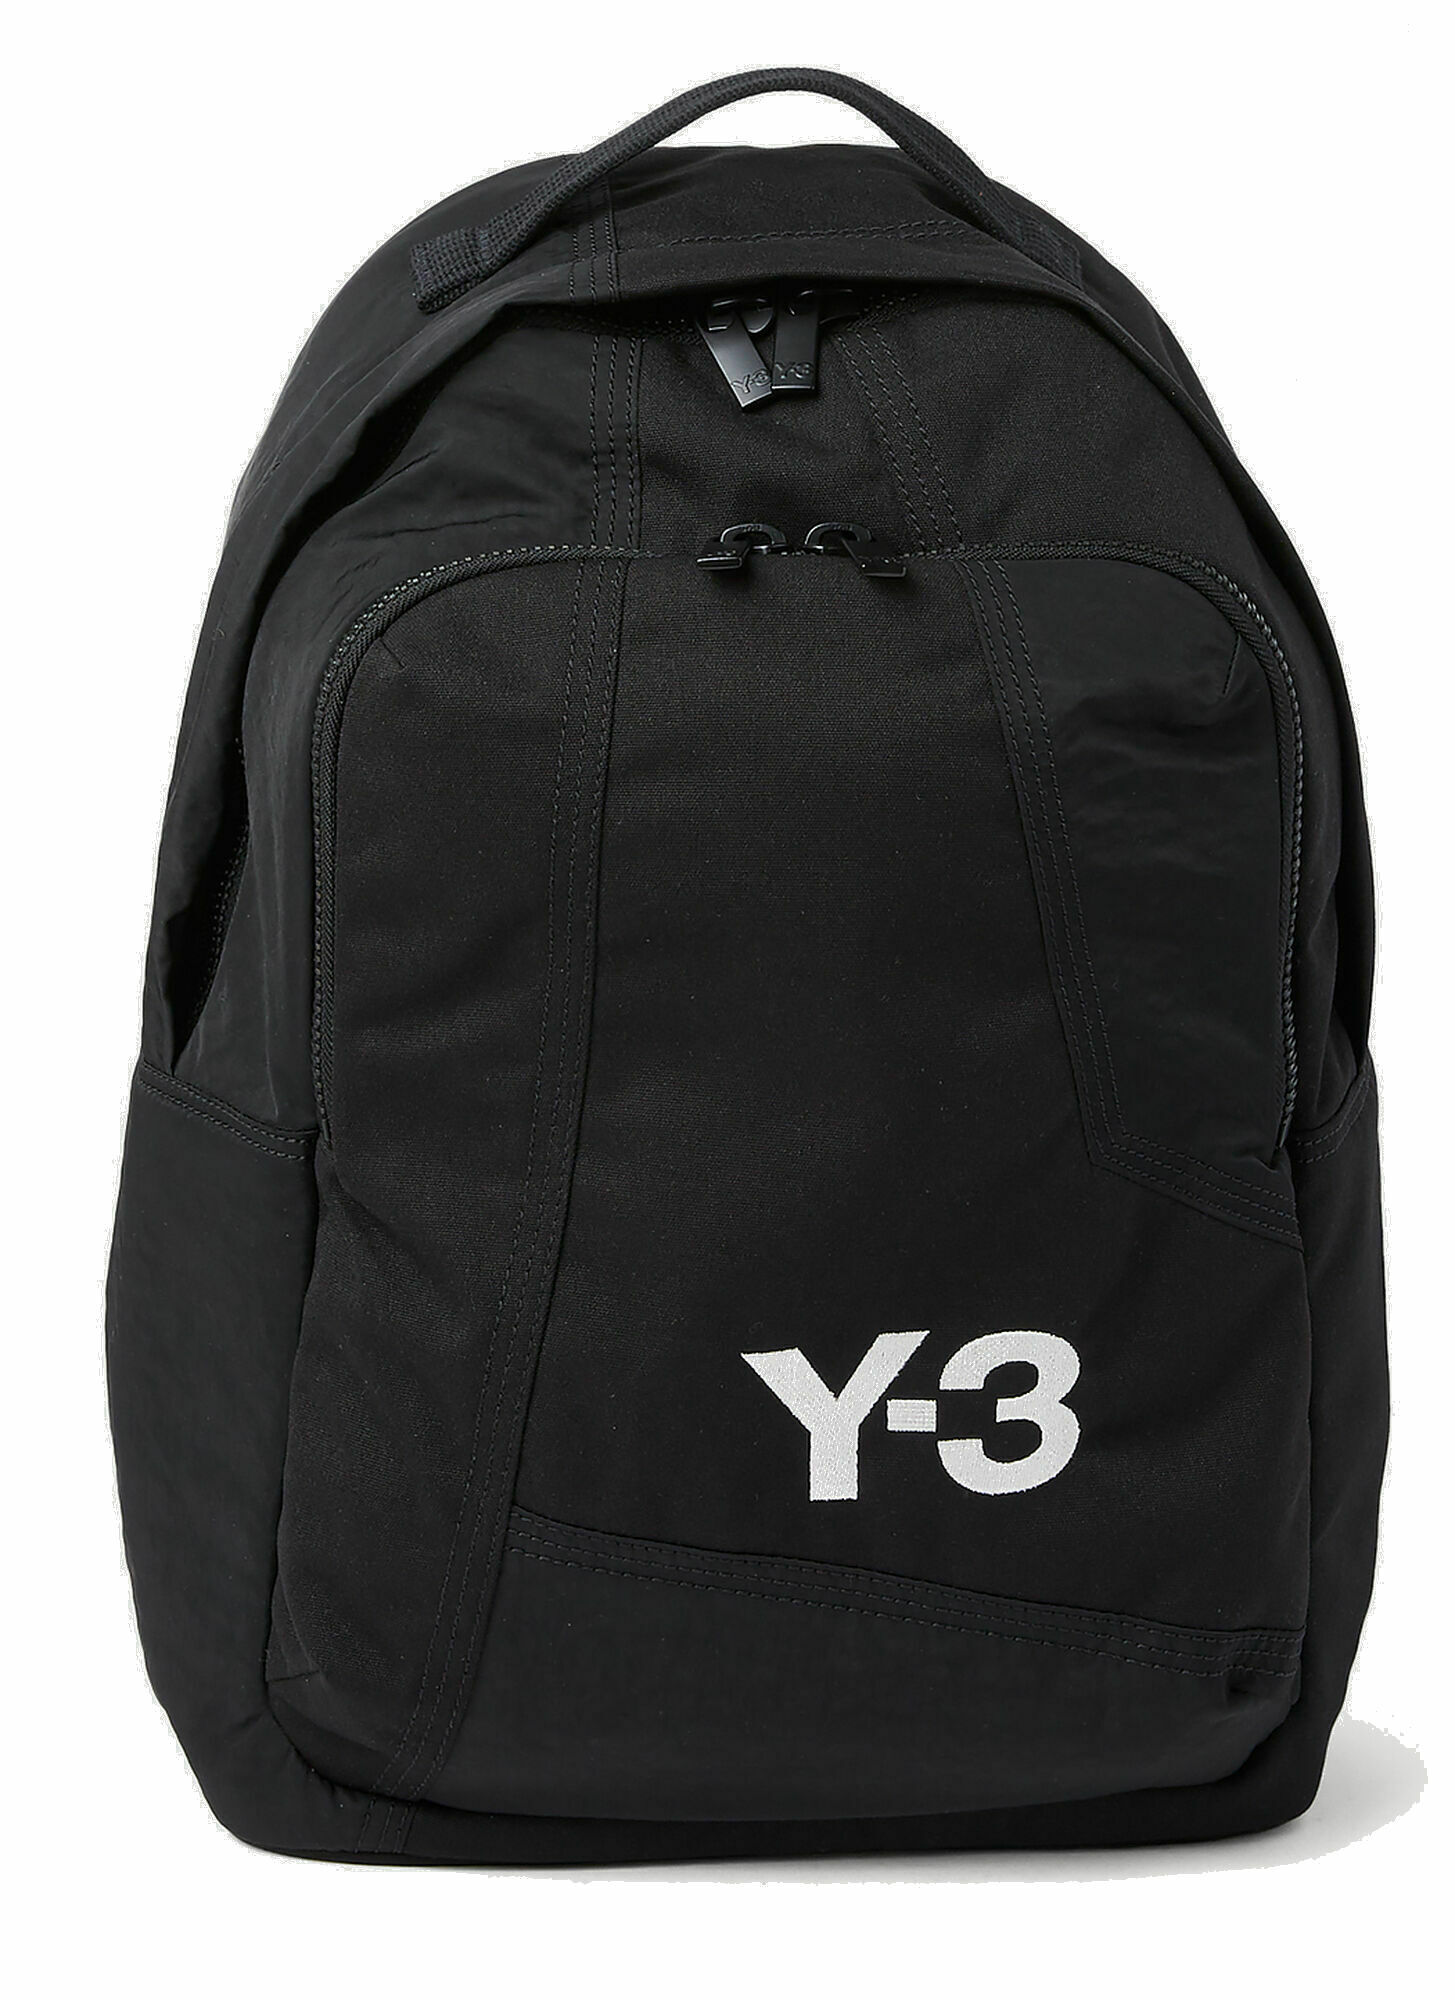 Classic Backpack in Black Y-3